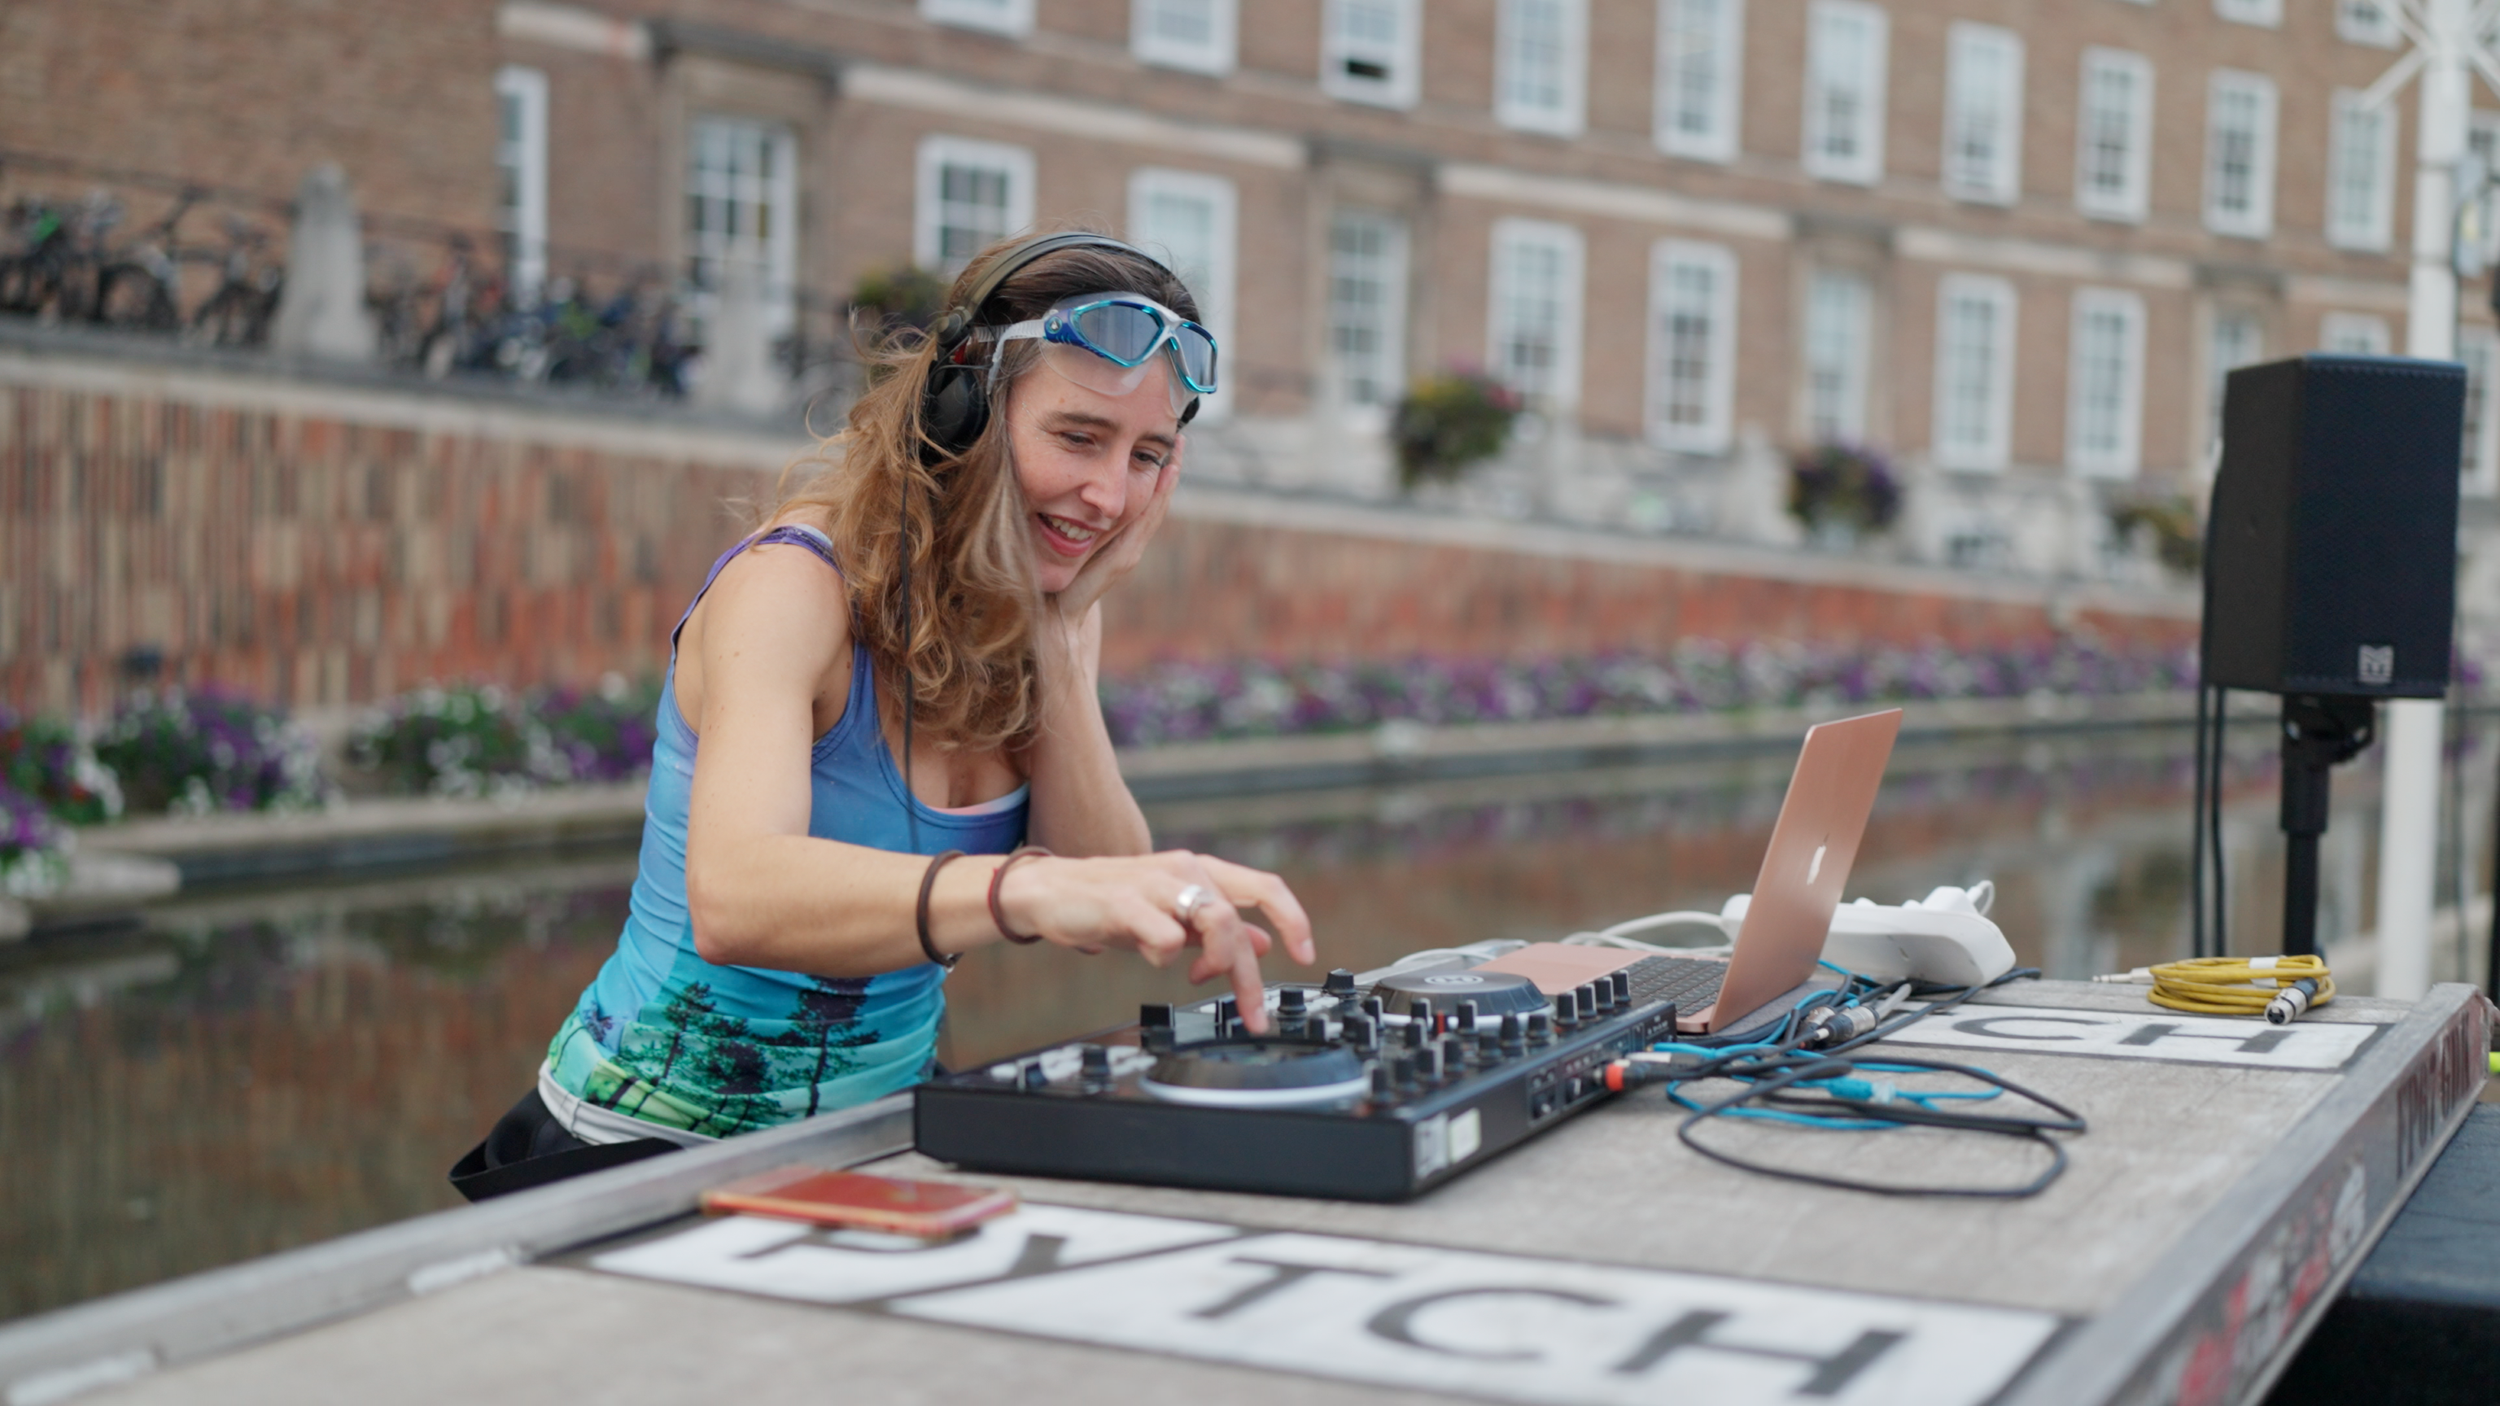 Bristol Council Rave Sophie Bolton DJ_Film Still by Charlotte Sawyer.png